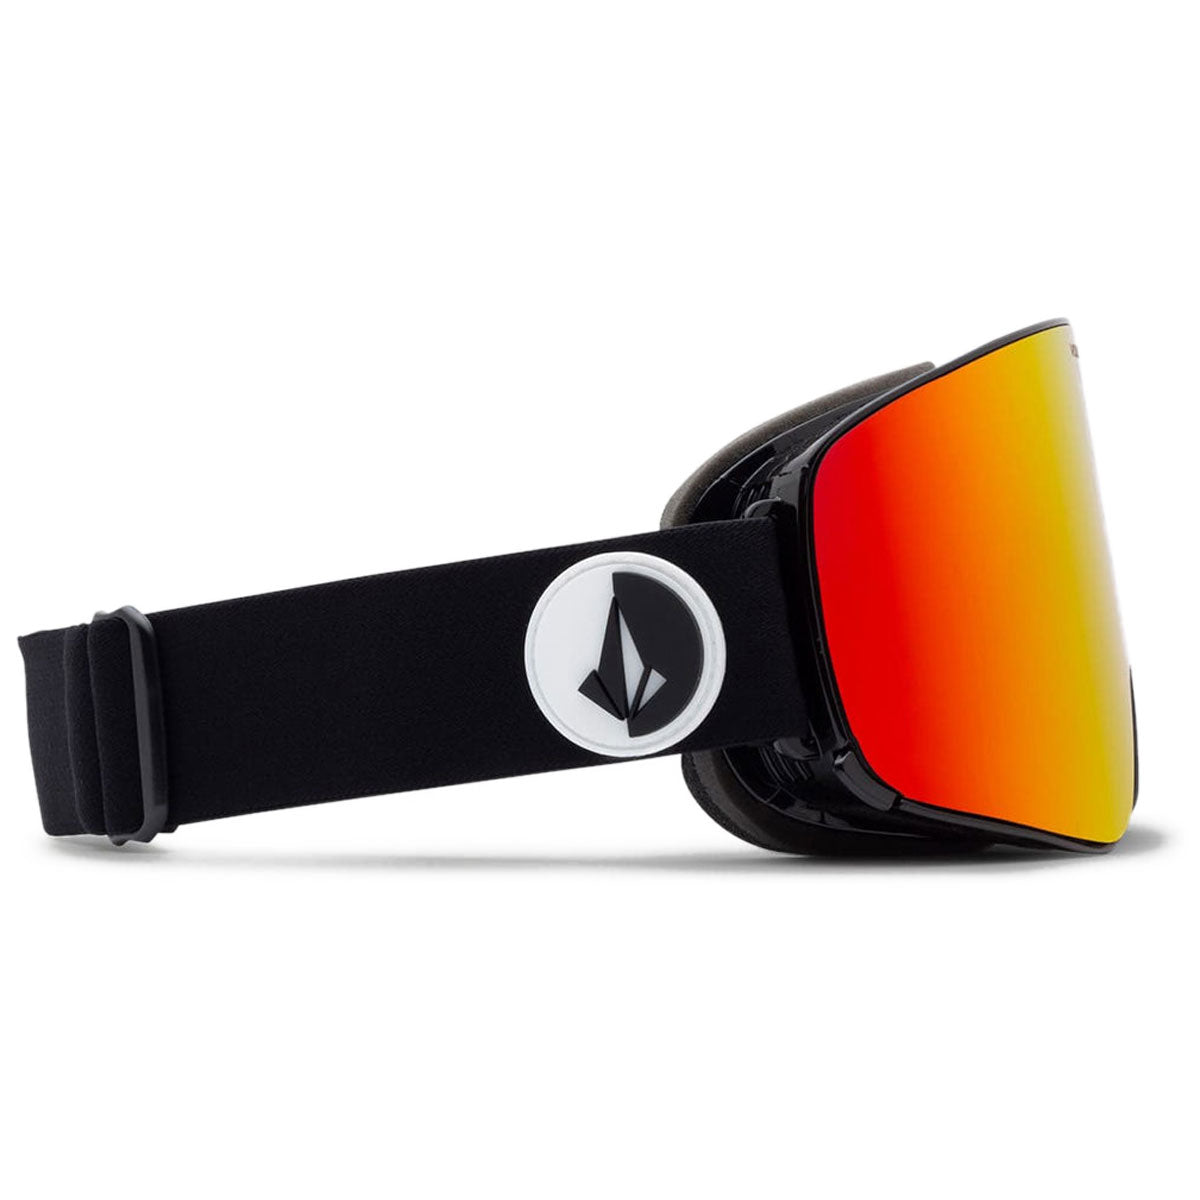 Volcom Odyssey Snowboard Goggles - Gloss Black/Red Chrome image 2